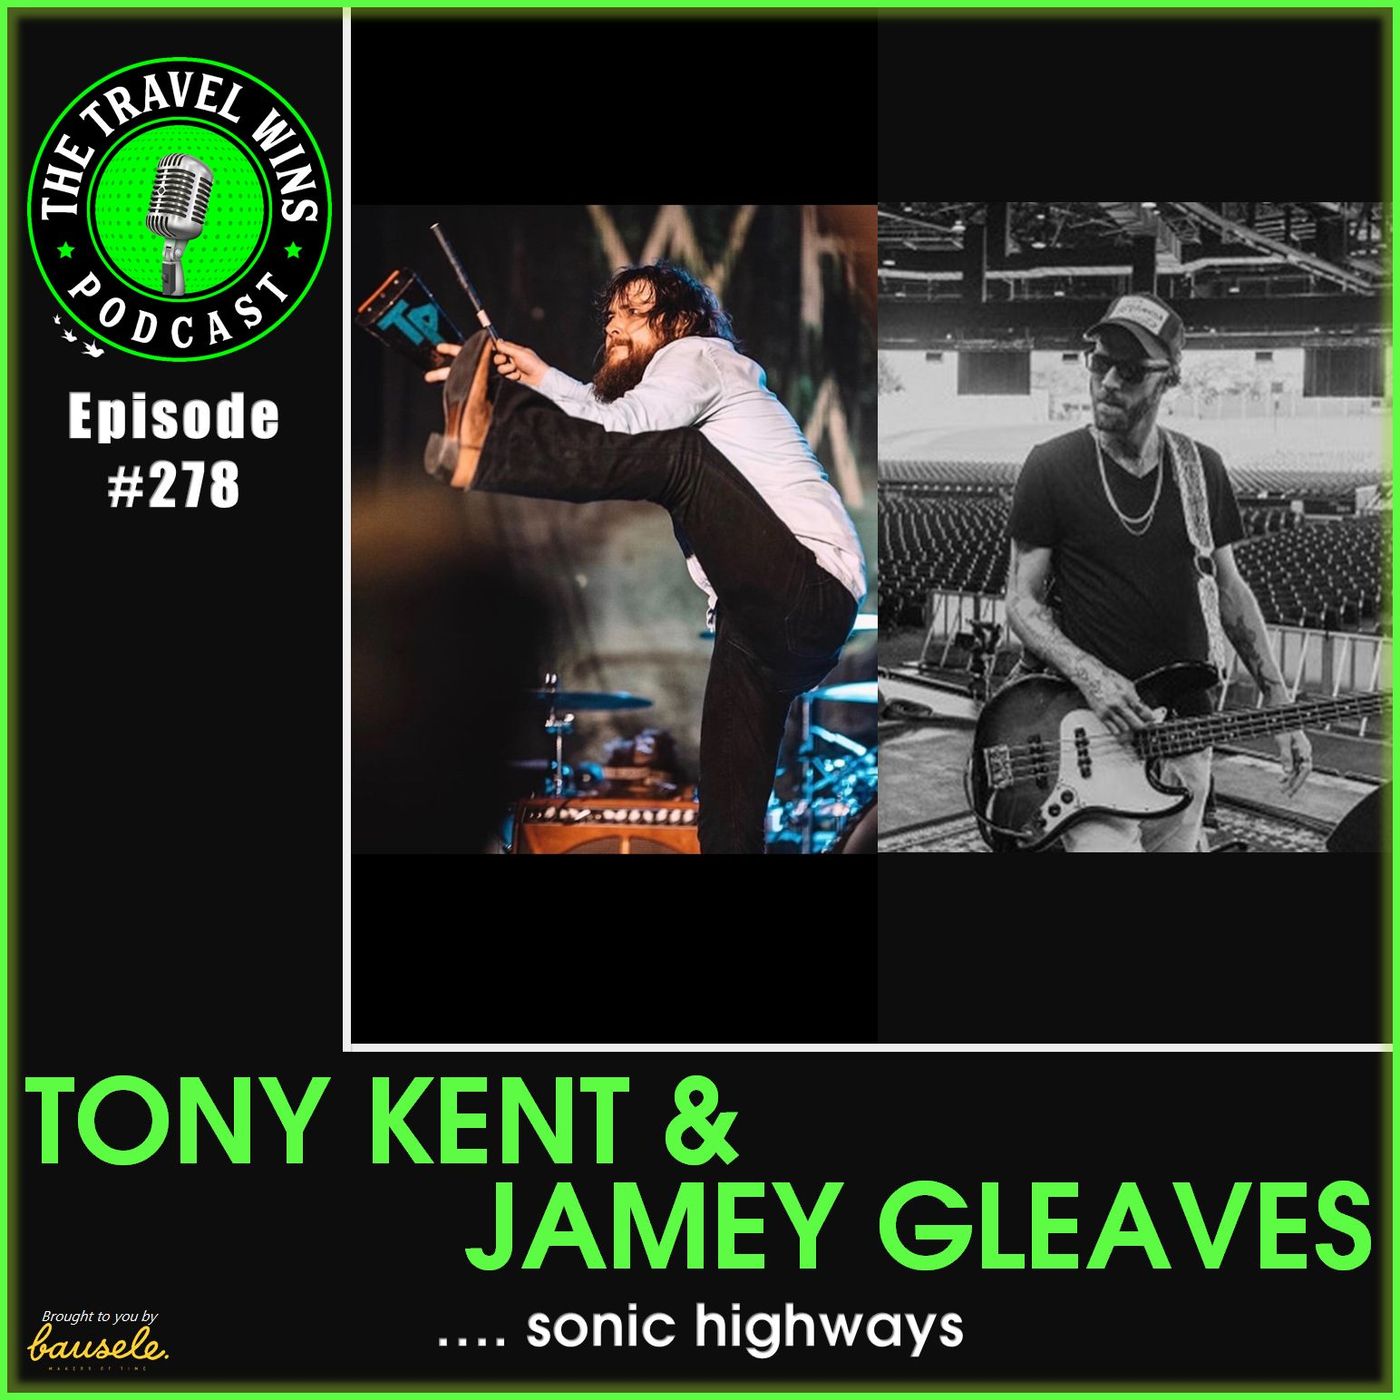 Tony Kent & Jamey Gleaves sonic highways - Ep. 278